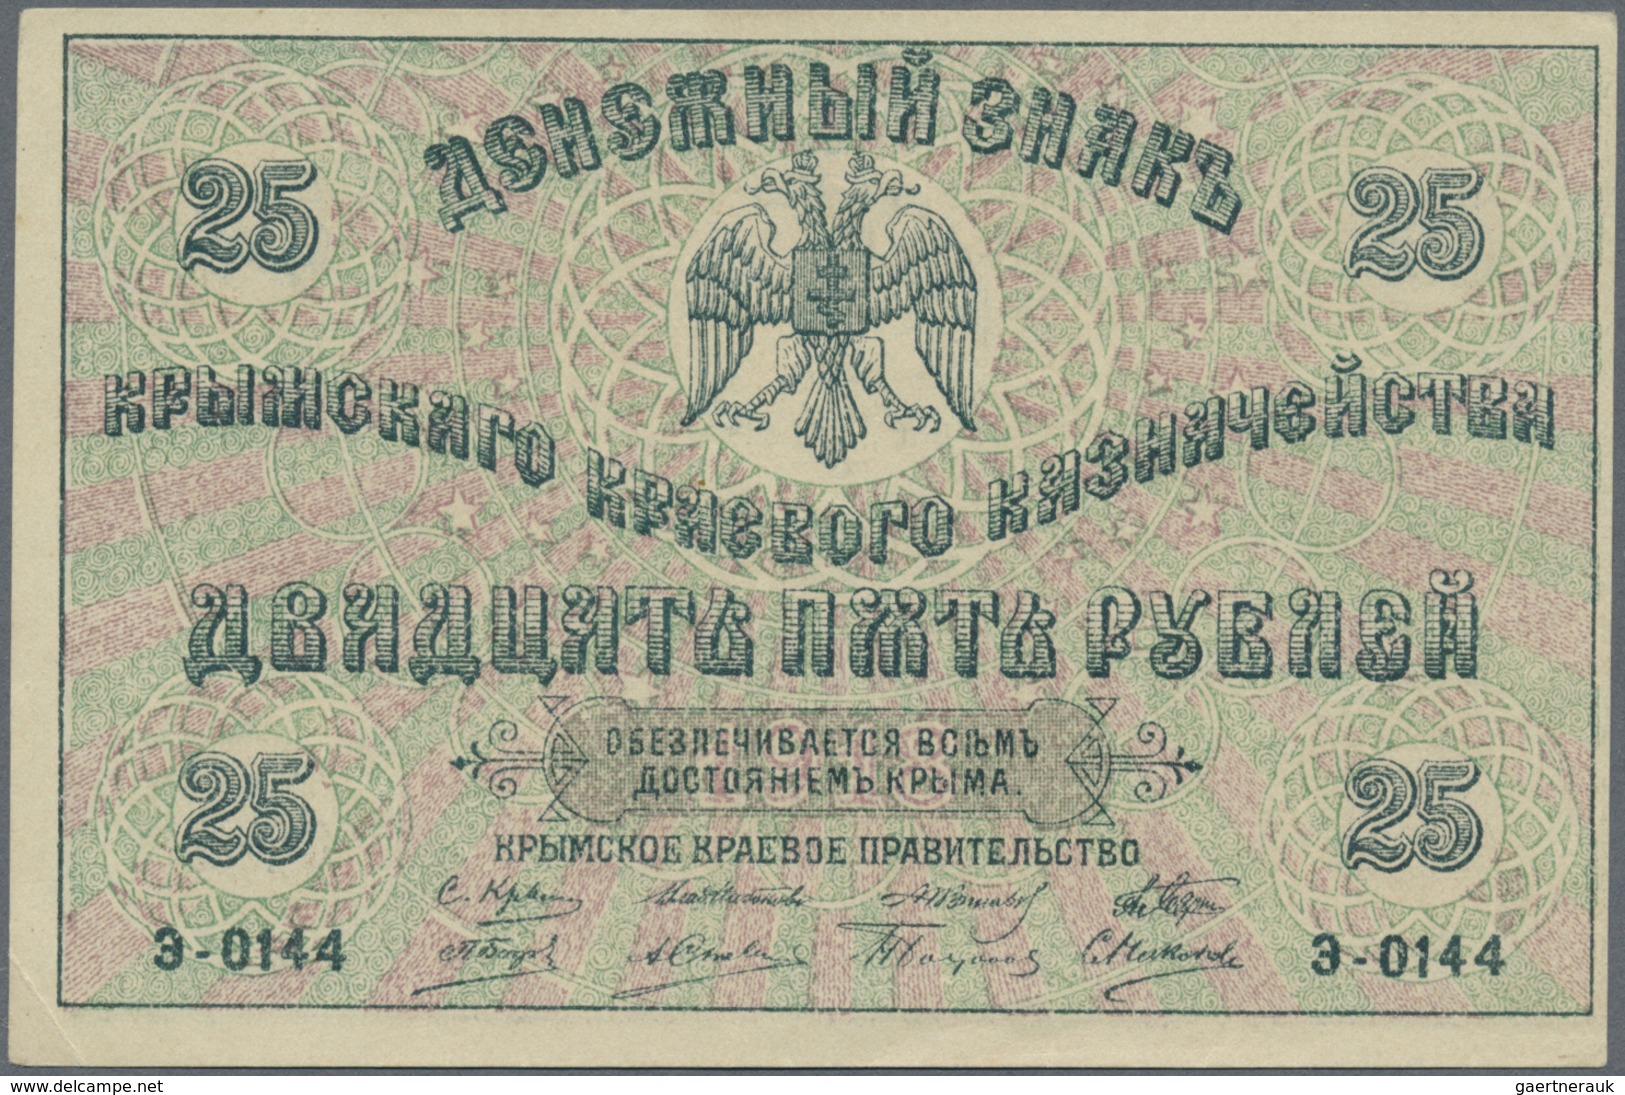 Ukraina / Ukraine: 25 Rubles 1918 P. S372b, One Cornerfold, Otherwise Perfect, Condition: AUNC. - Ukraine